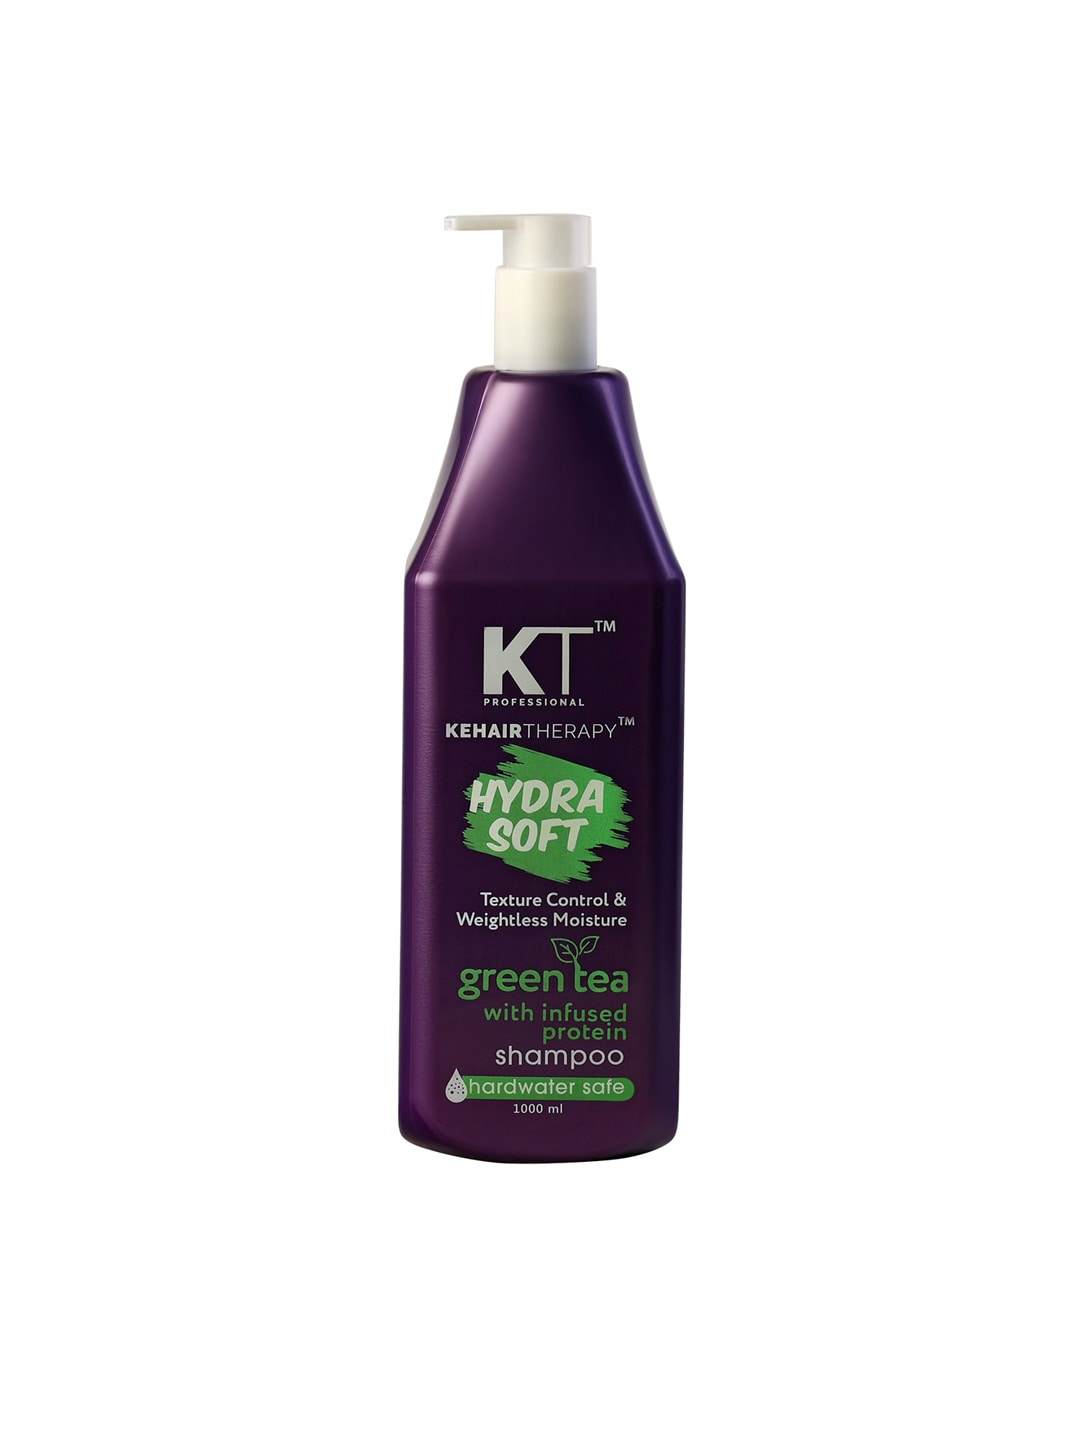 KEHAIRTHERAPY Professional Hydra Soft Texture Control Keratin Green Tea Shampoo - 1000 ml Price in India